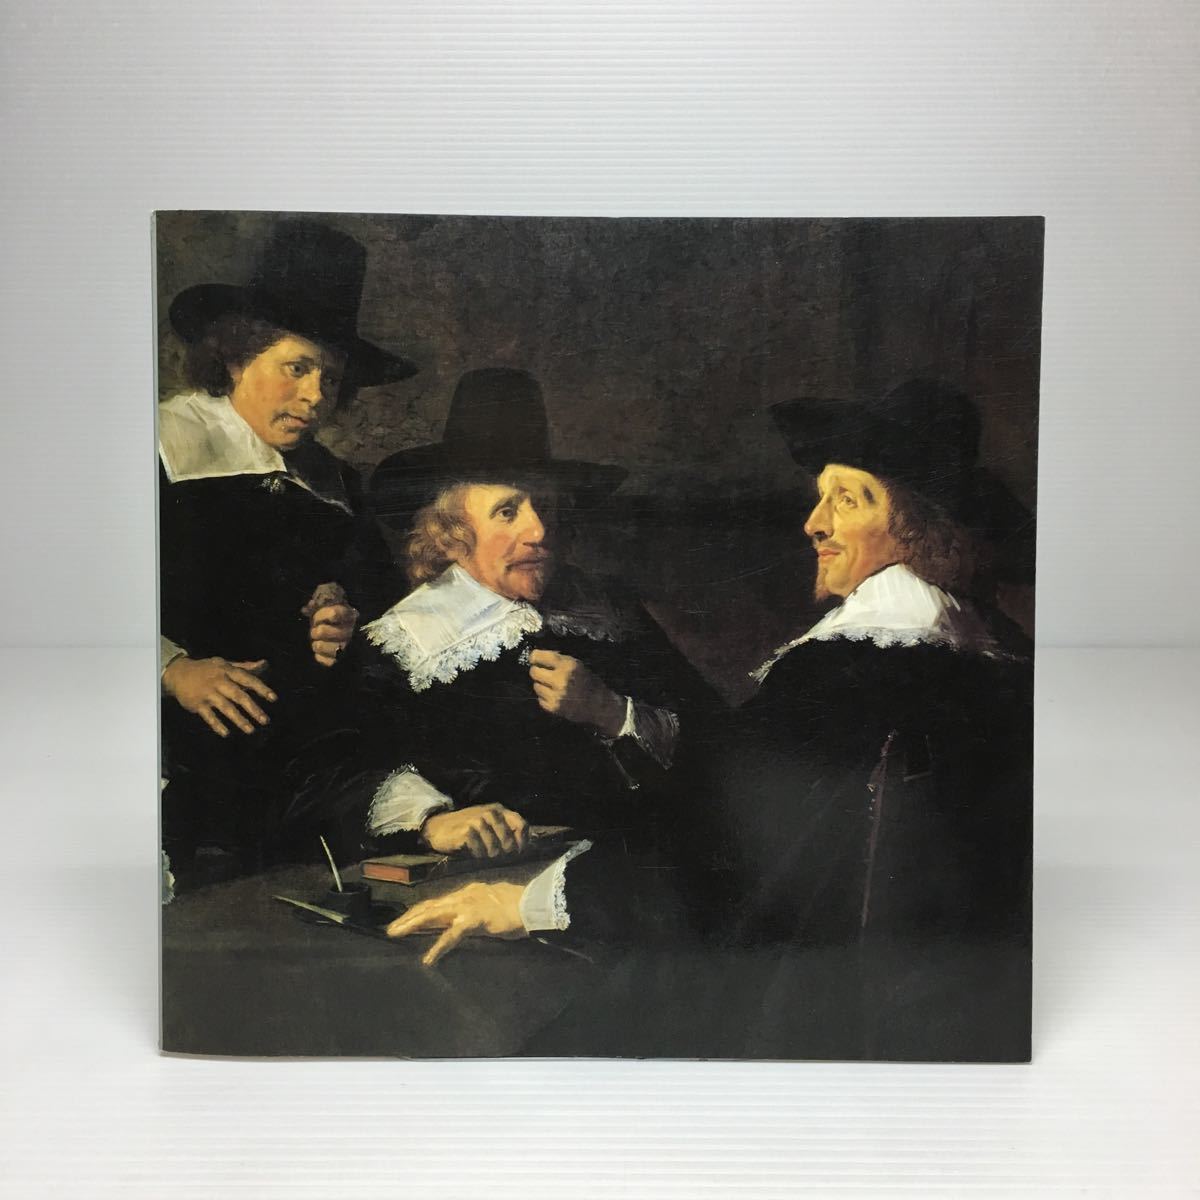 m2/프란스 할스와 17세기 네덜란드 회화의 황금 비율 FRNS HALS & HAARLEM PAINTERS 1988, 그림, 그림책, 수집, 목록